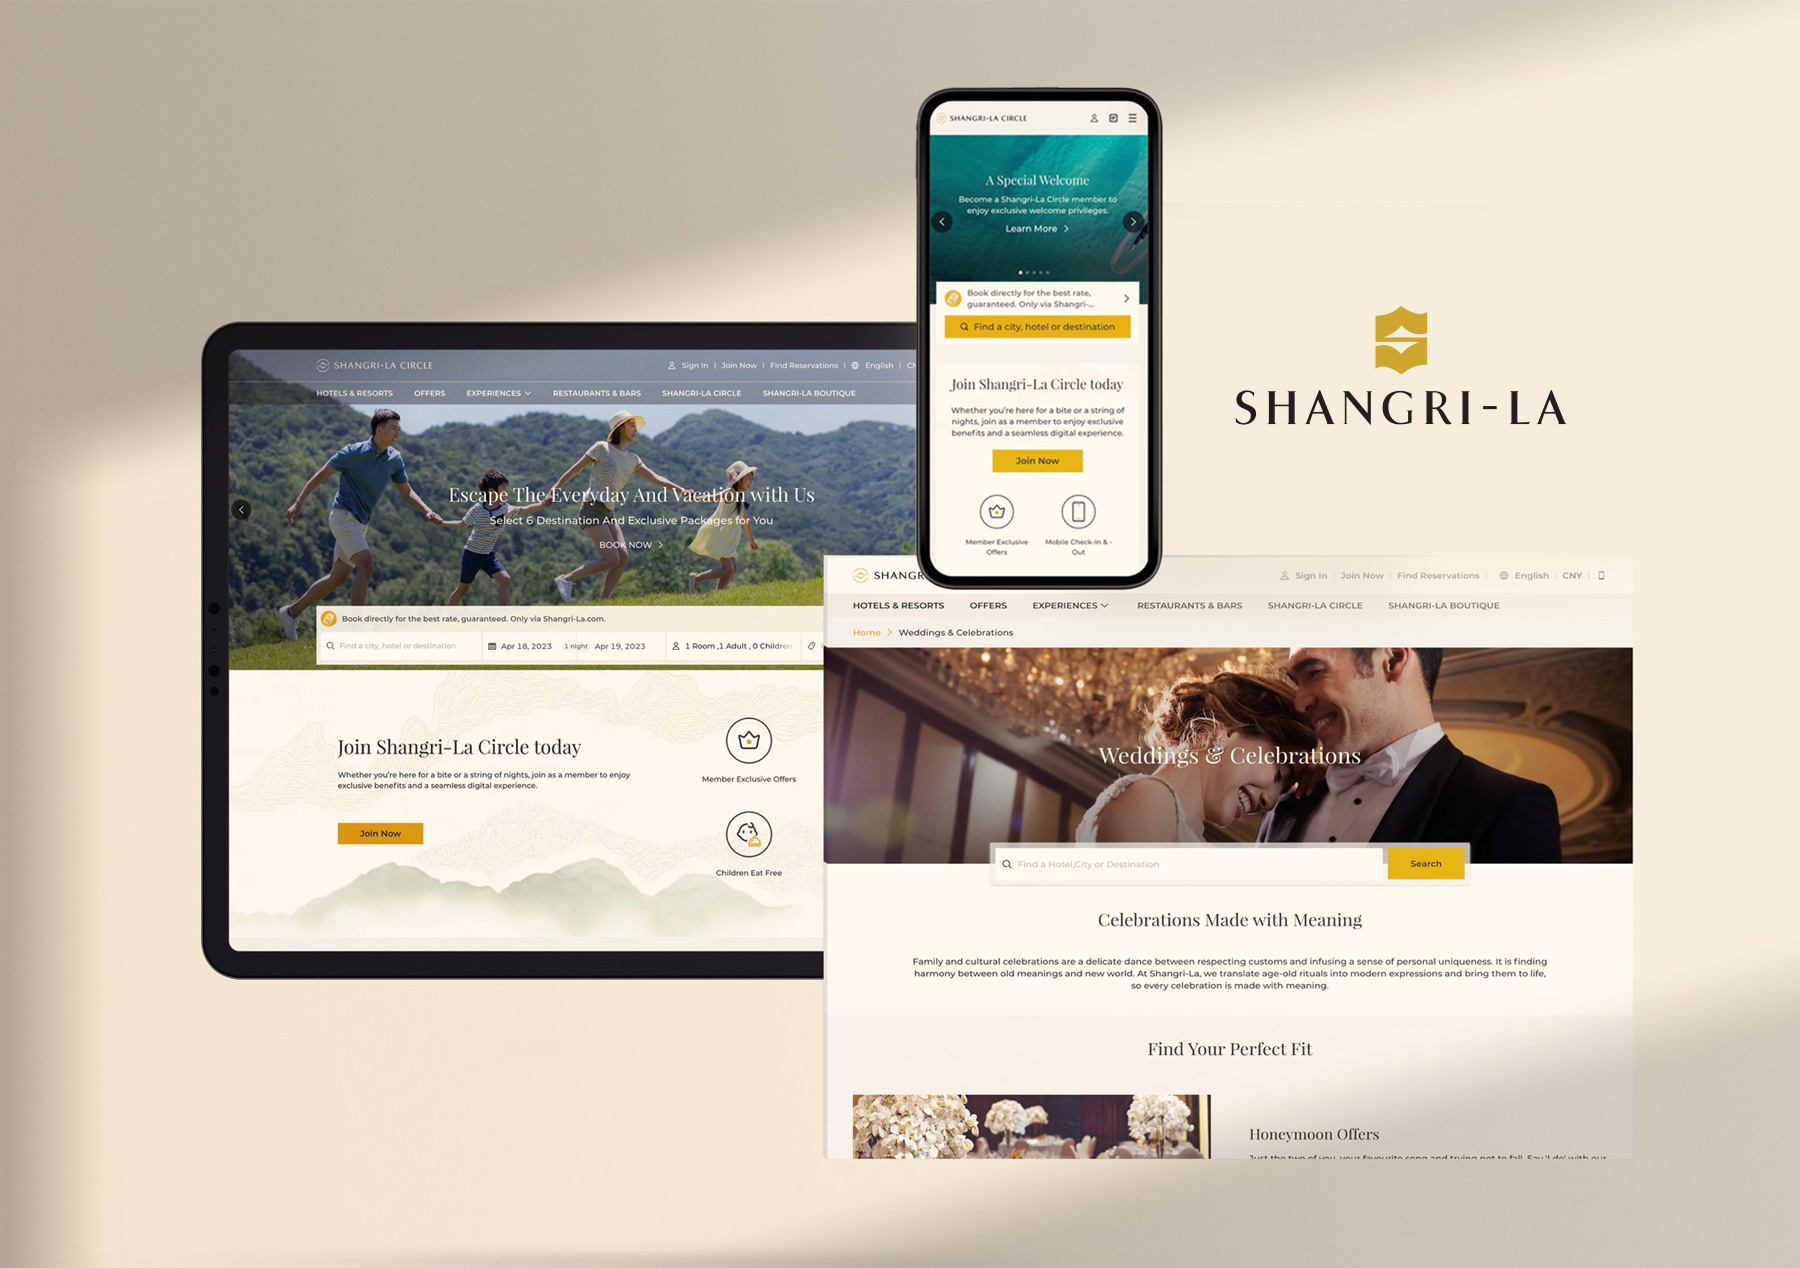 Shangri-La Hotel Group Official Website